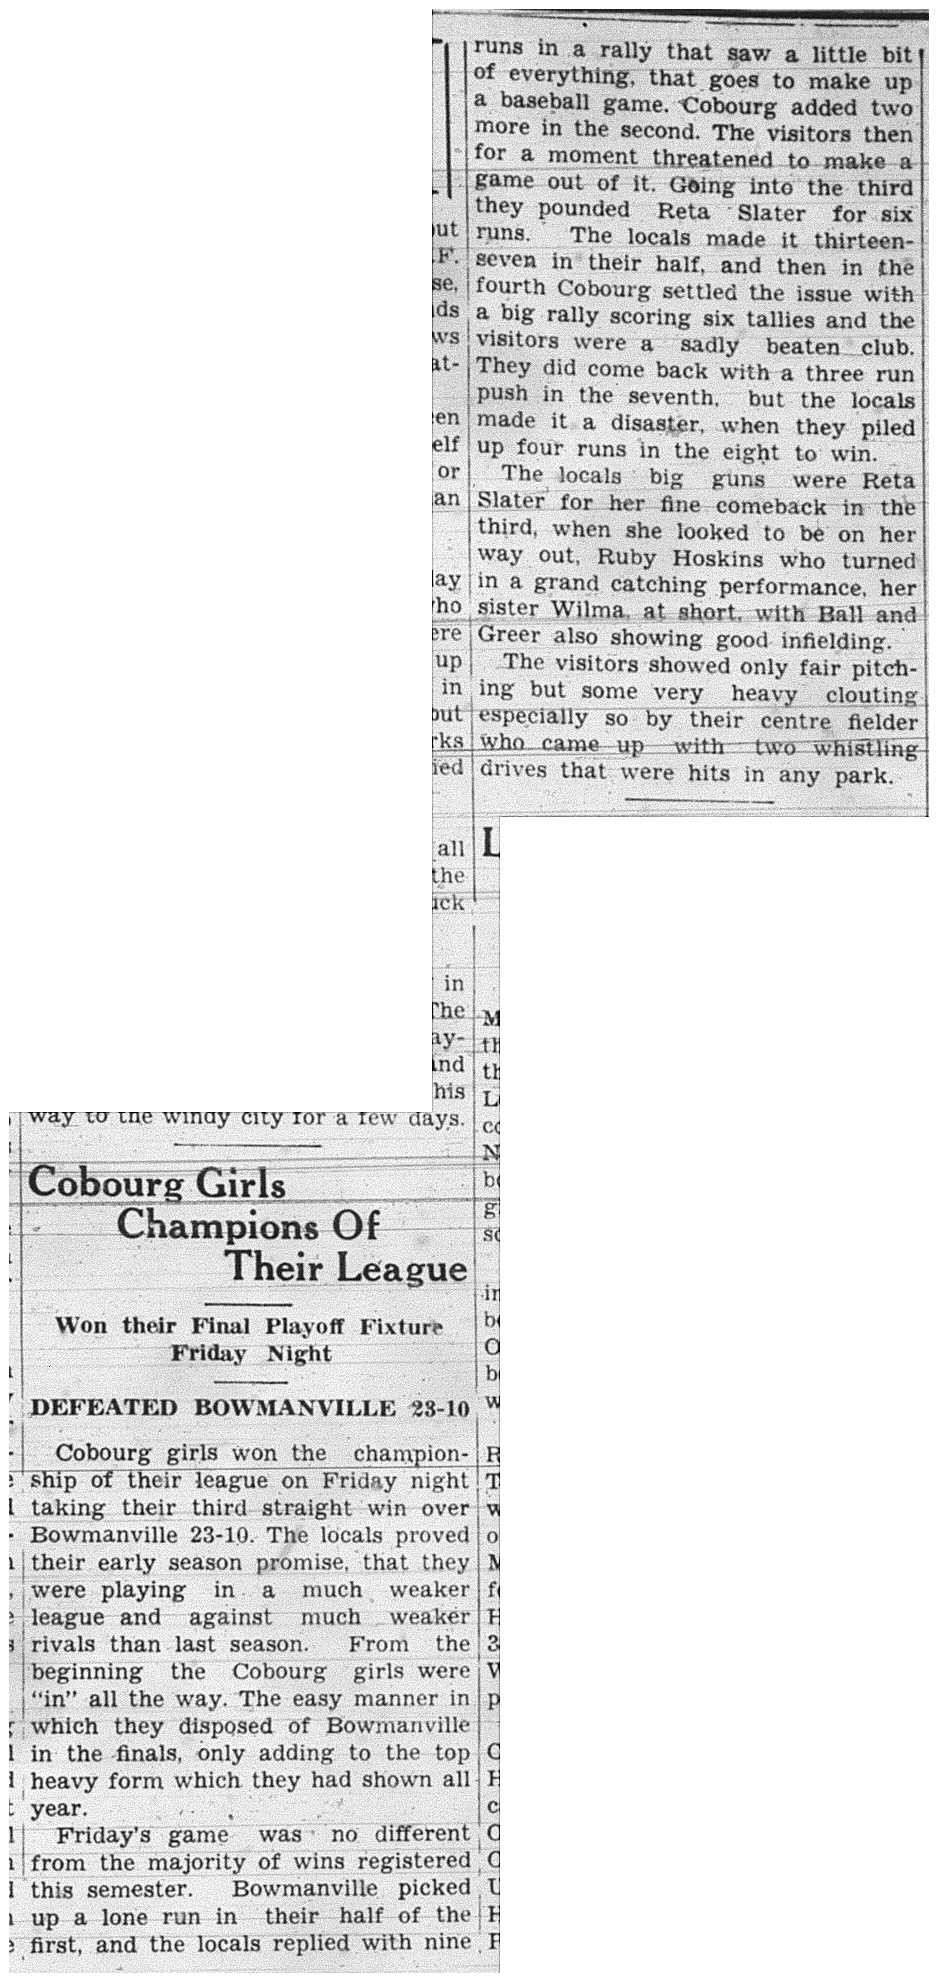 1938-09-08 Softball -Ladies League Champions